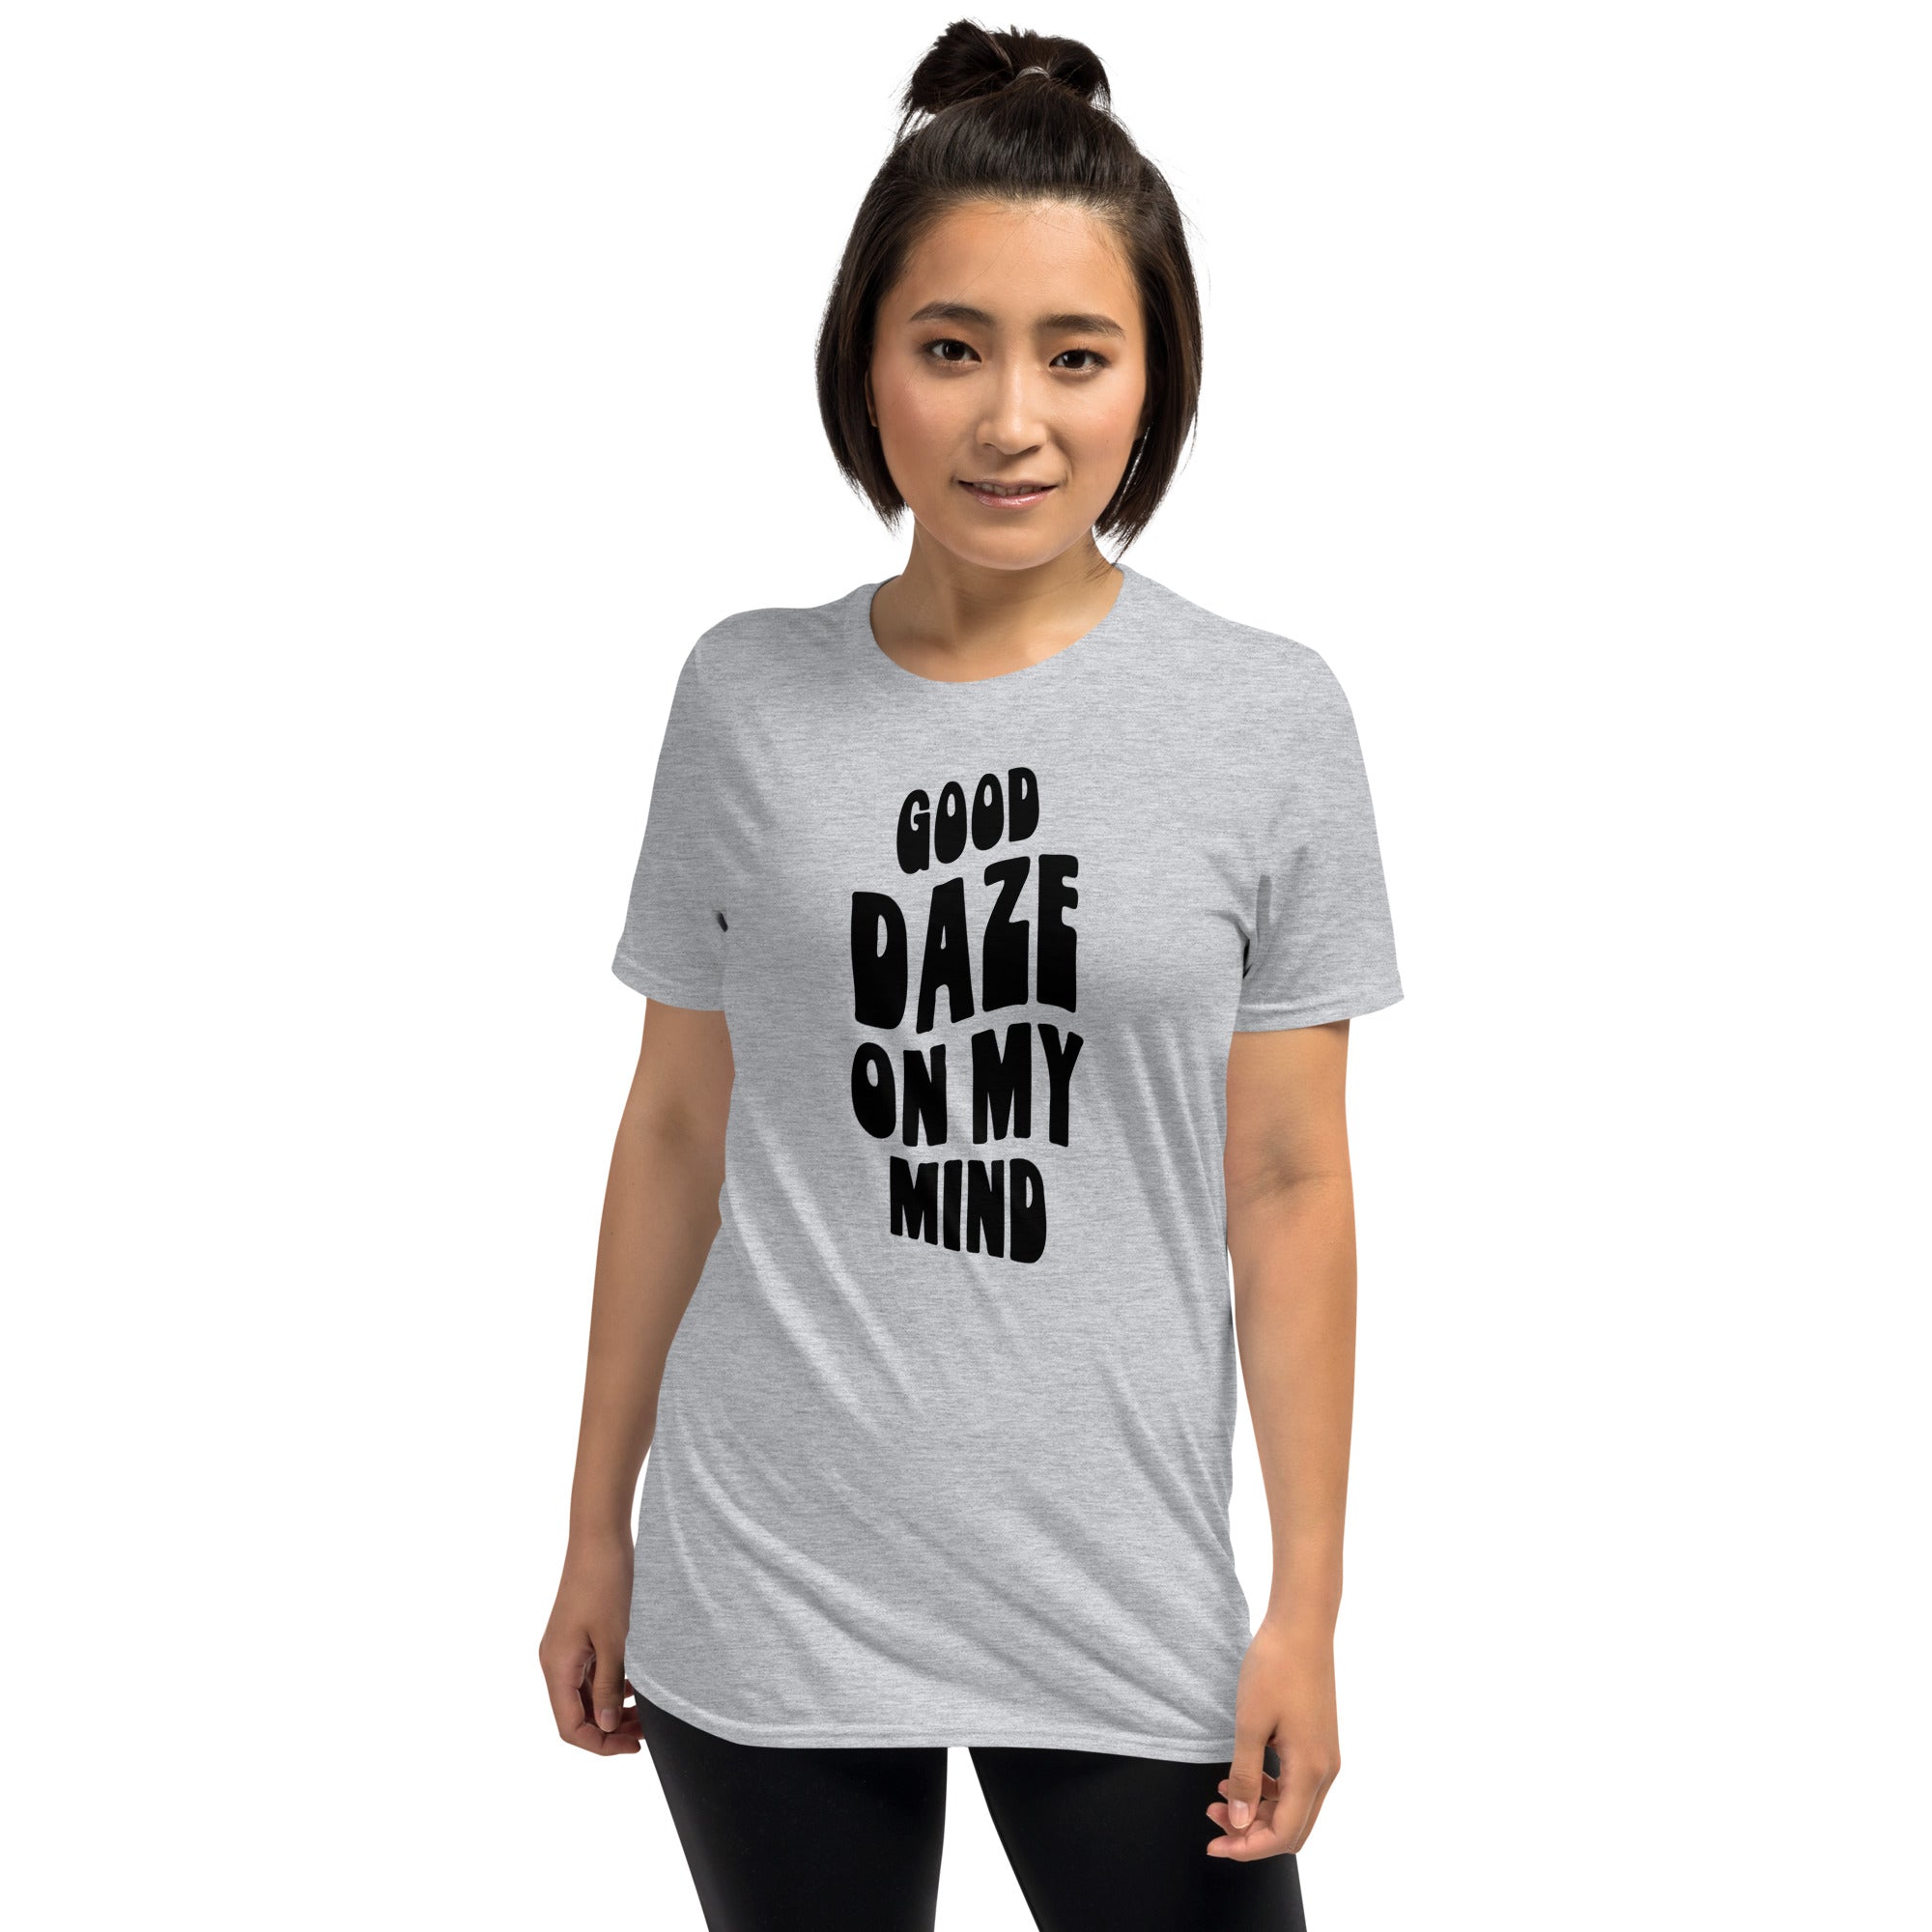 Good Daze On My Mind - Short-Sleeve Unisex T-Shirt